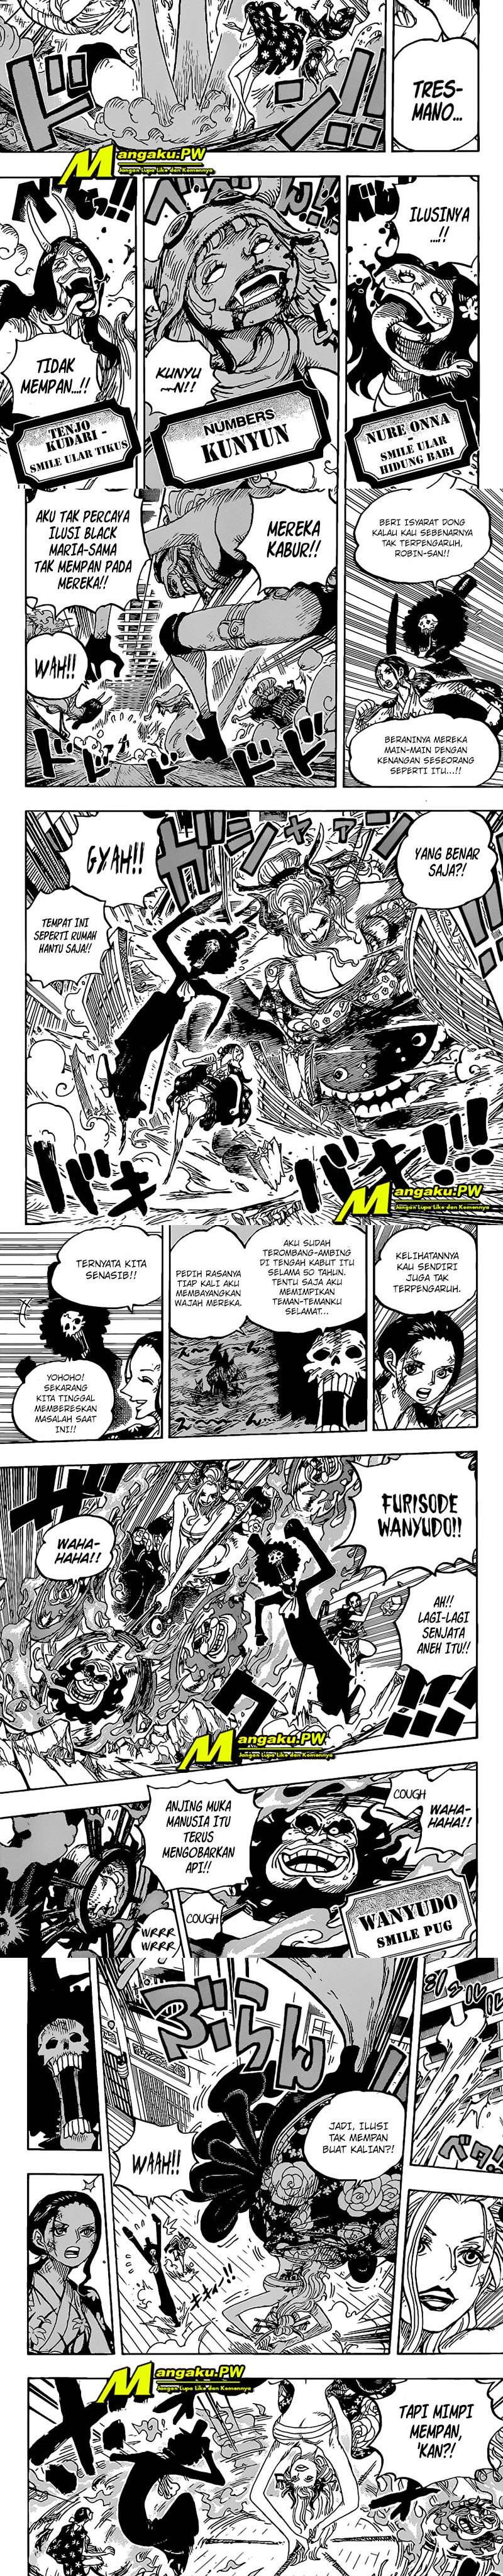 Link Baca Manga One Piece Chapter 1020: Sosok Misterius Awasi Monkey D  Luffy dan Kozuki Momonosuke - Tribunjakarta.com